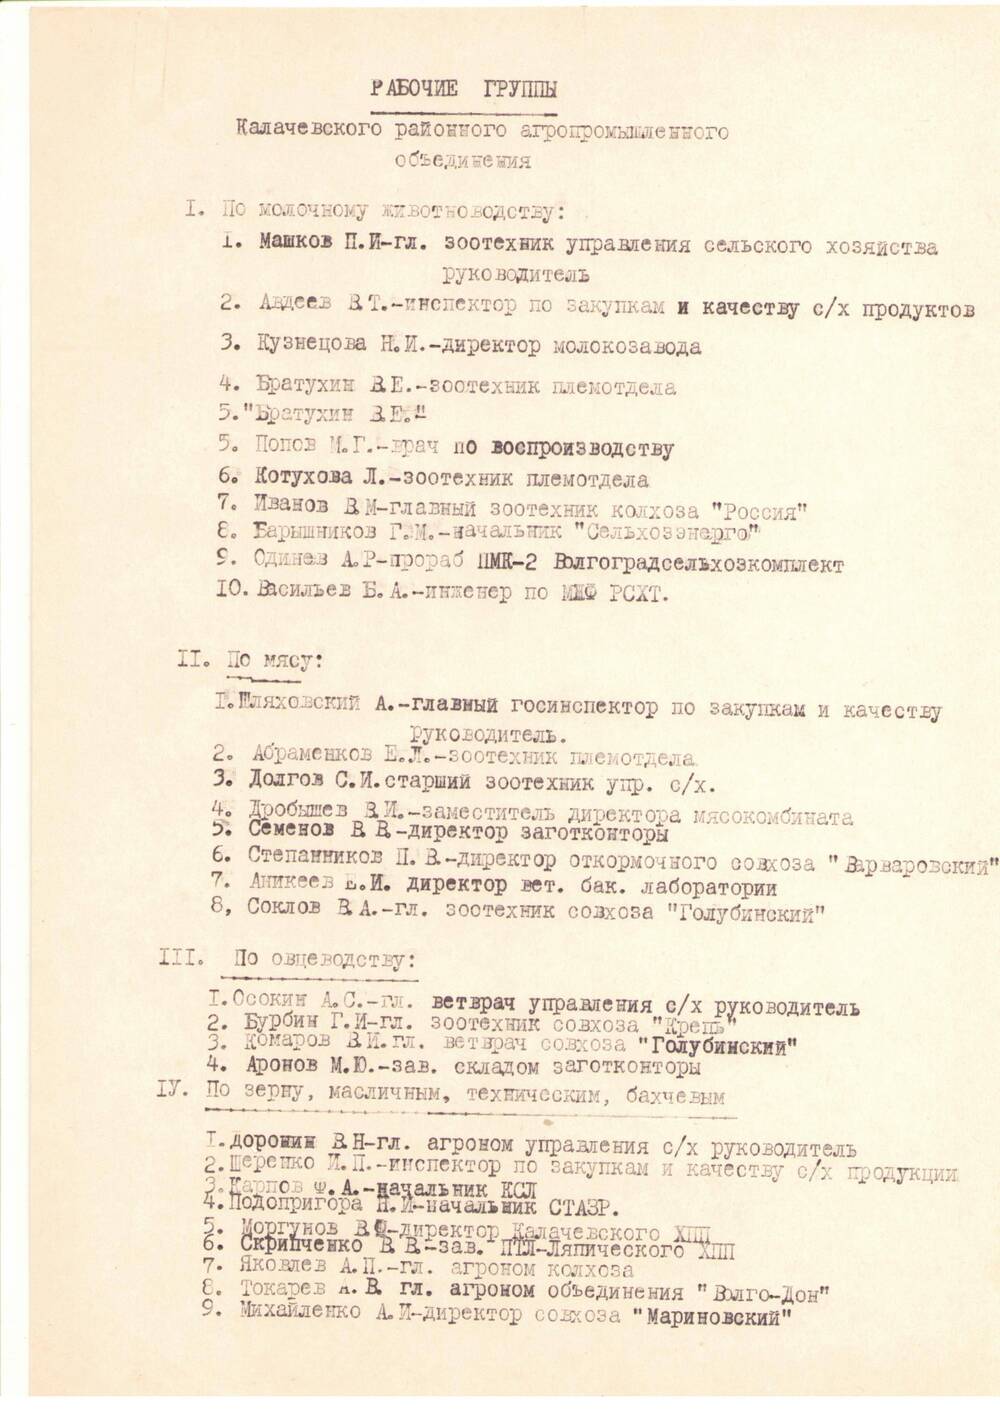 Рабочие группы РАПО, г. Калач-на-дону, 04.03.1983г